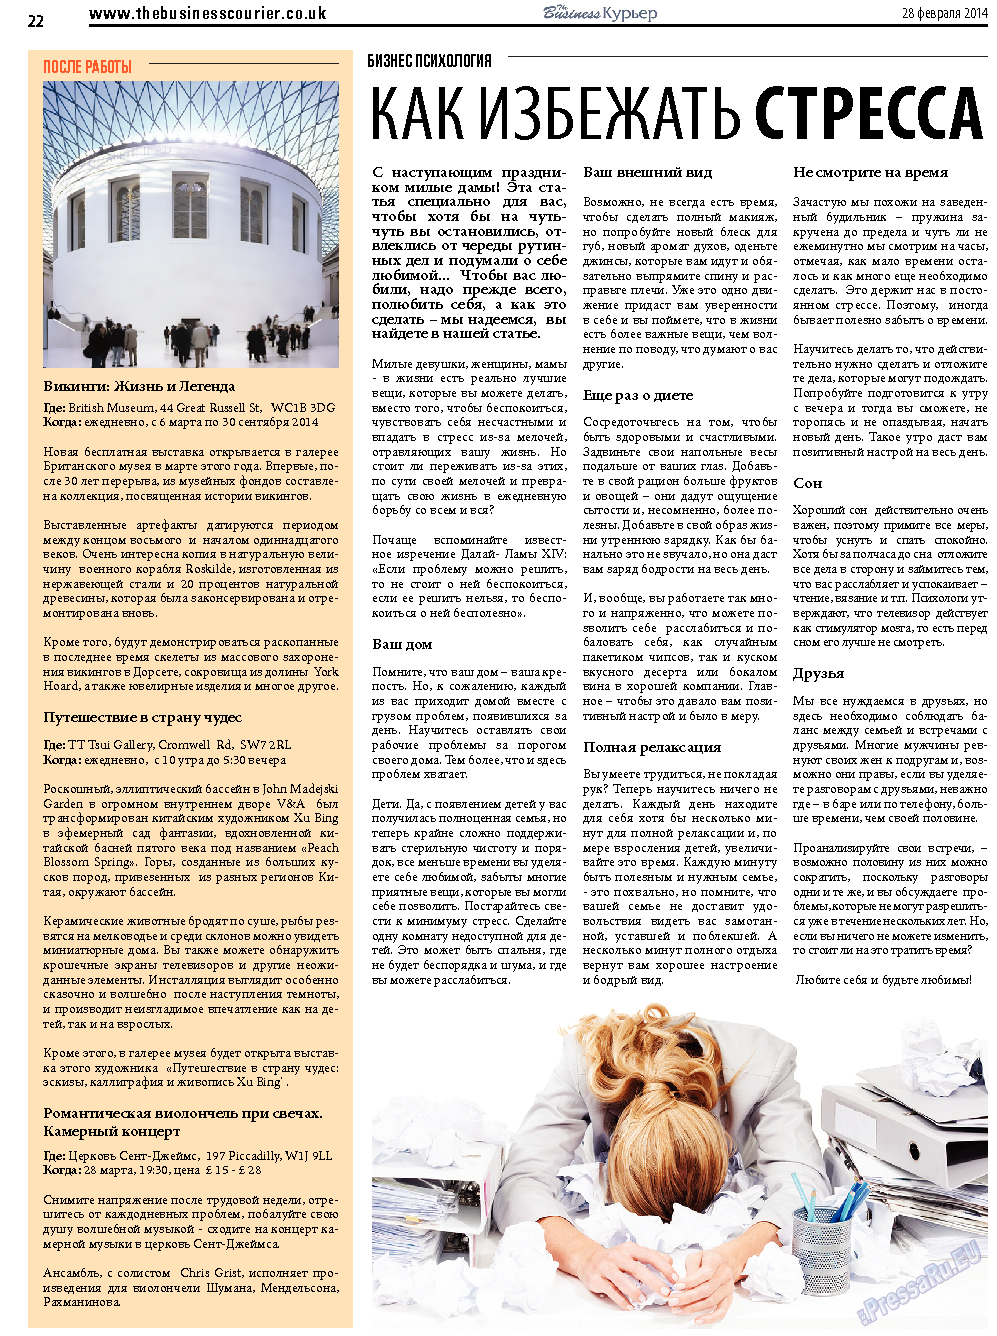 The Business Курьер, газета. 2014 №21 стр.22